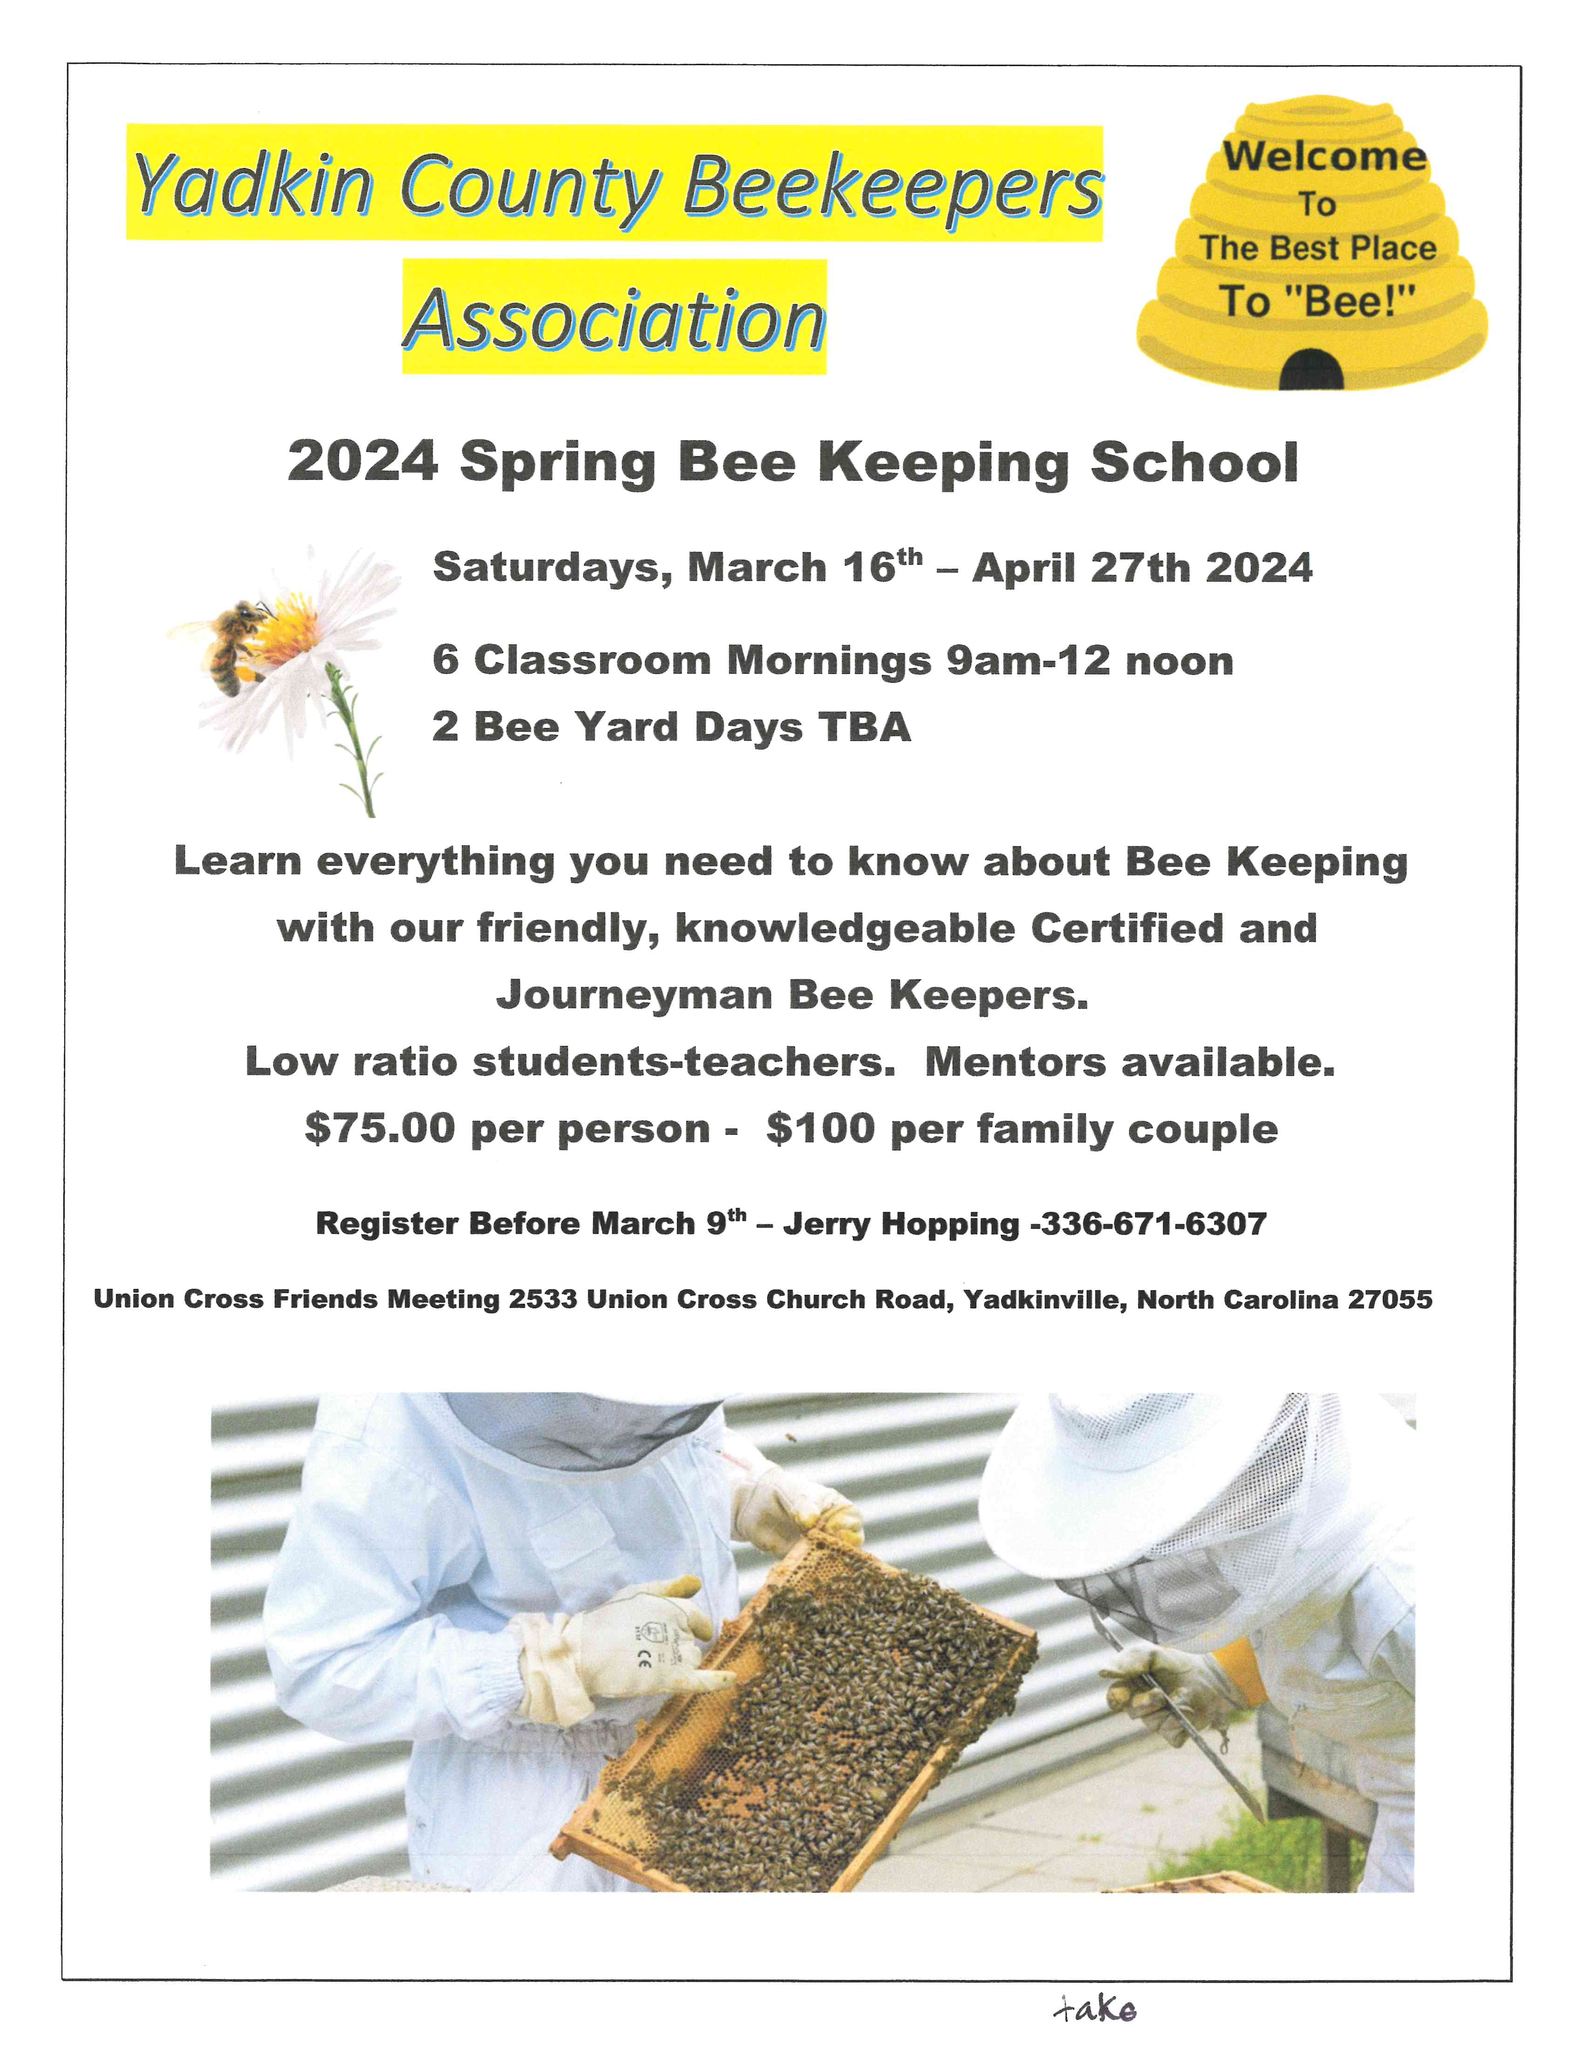 2024 Bee Keeping School flyer.